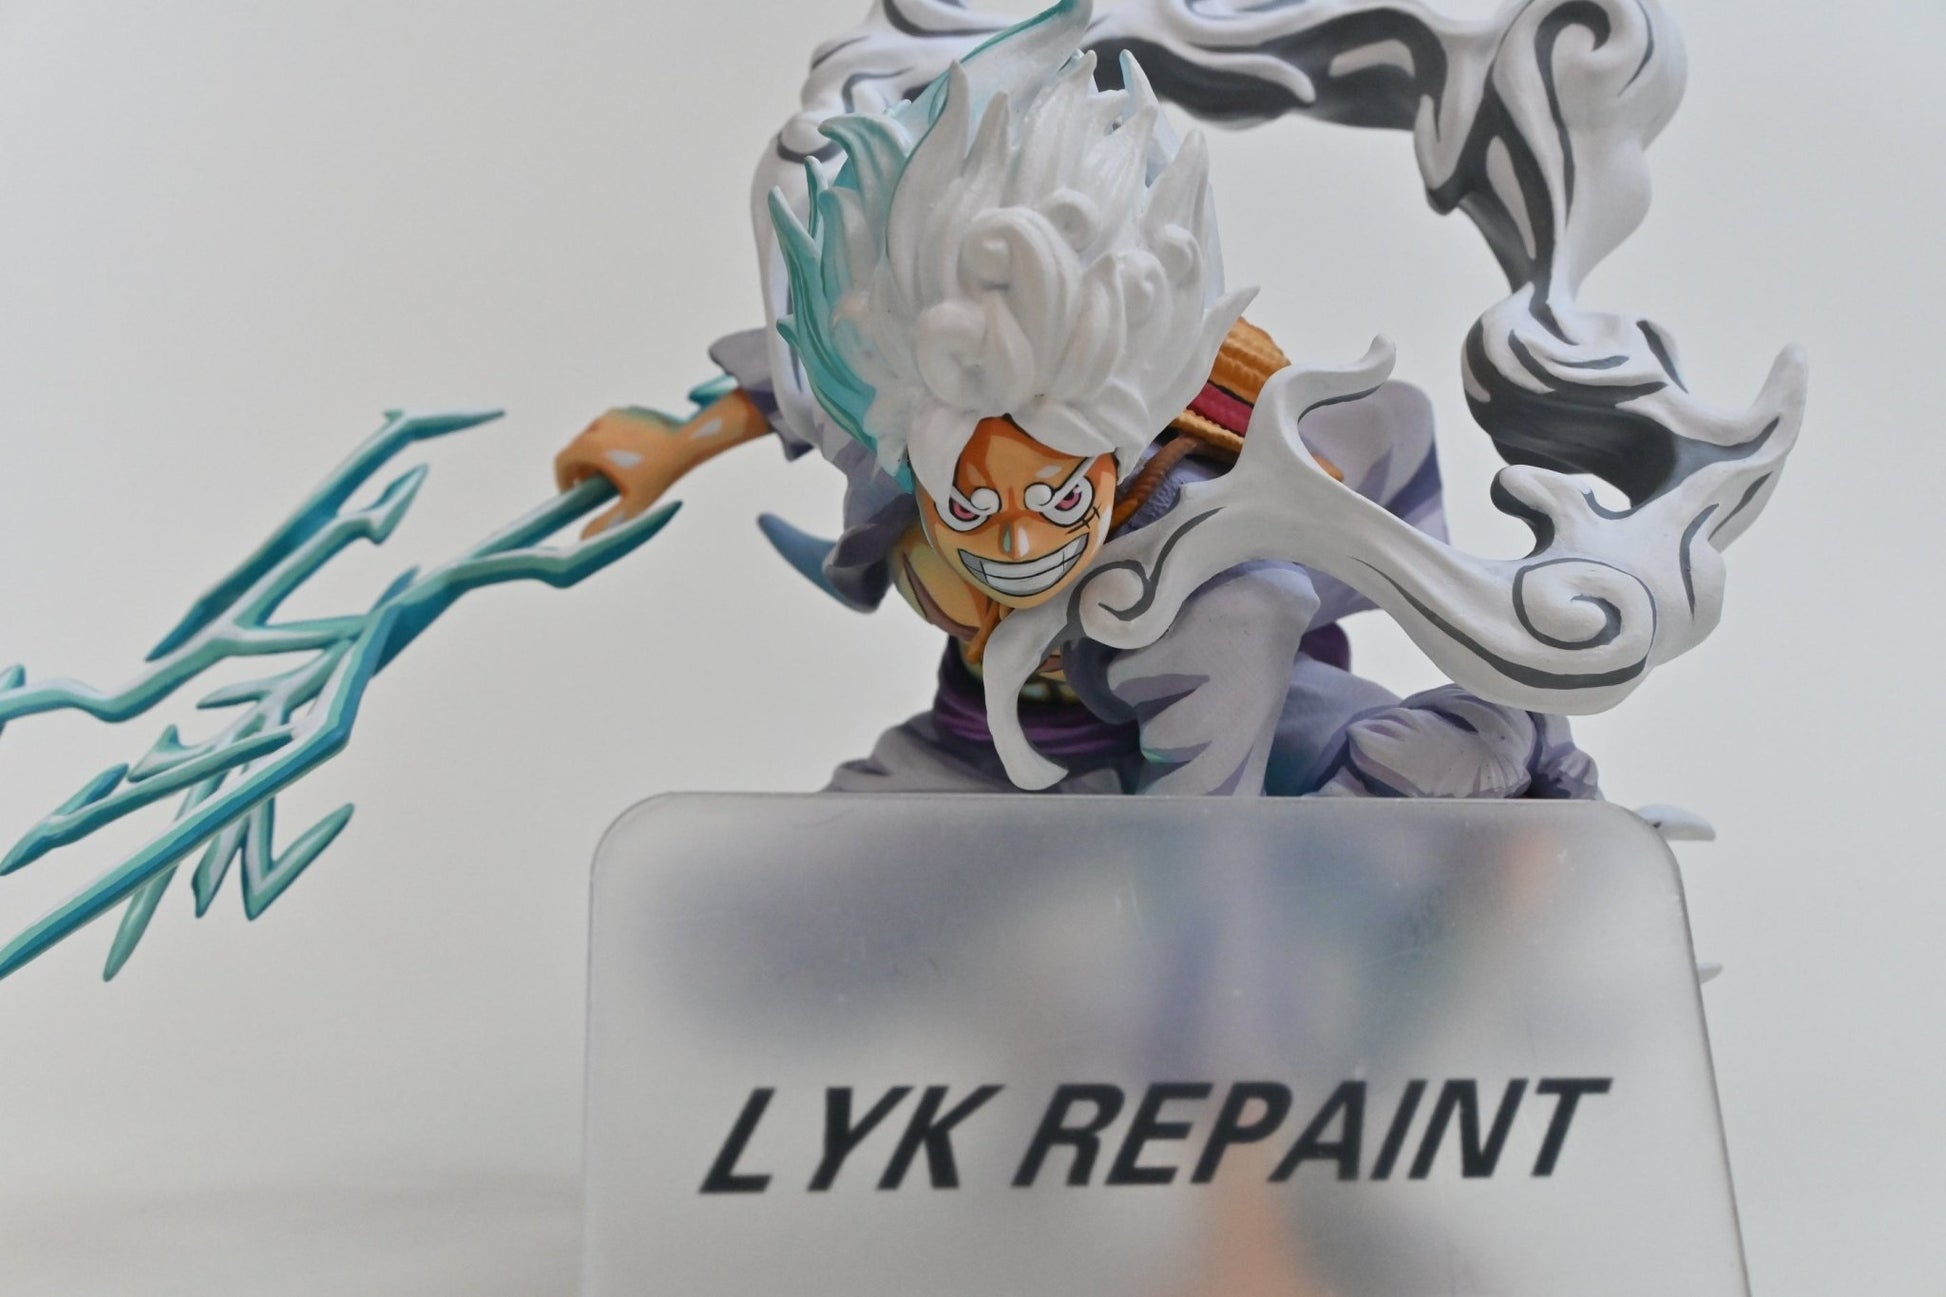 2d comic color one piece figure repaint-The gear 5 luffy – Lyk Repaint